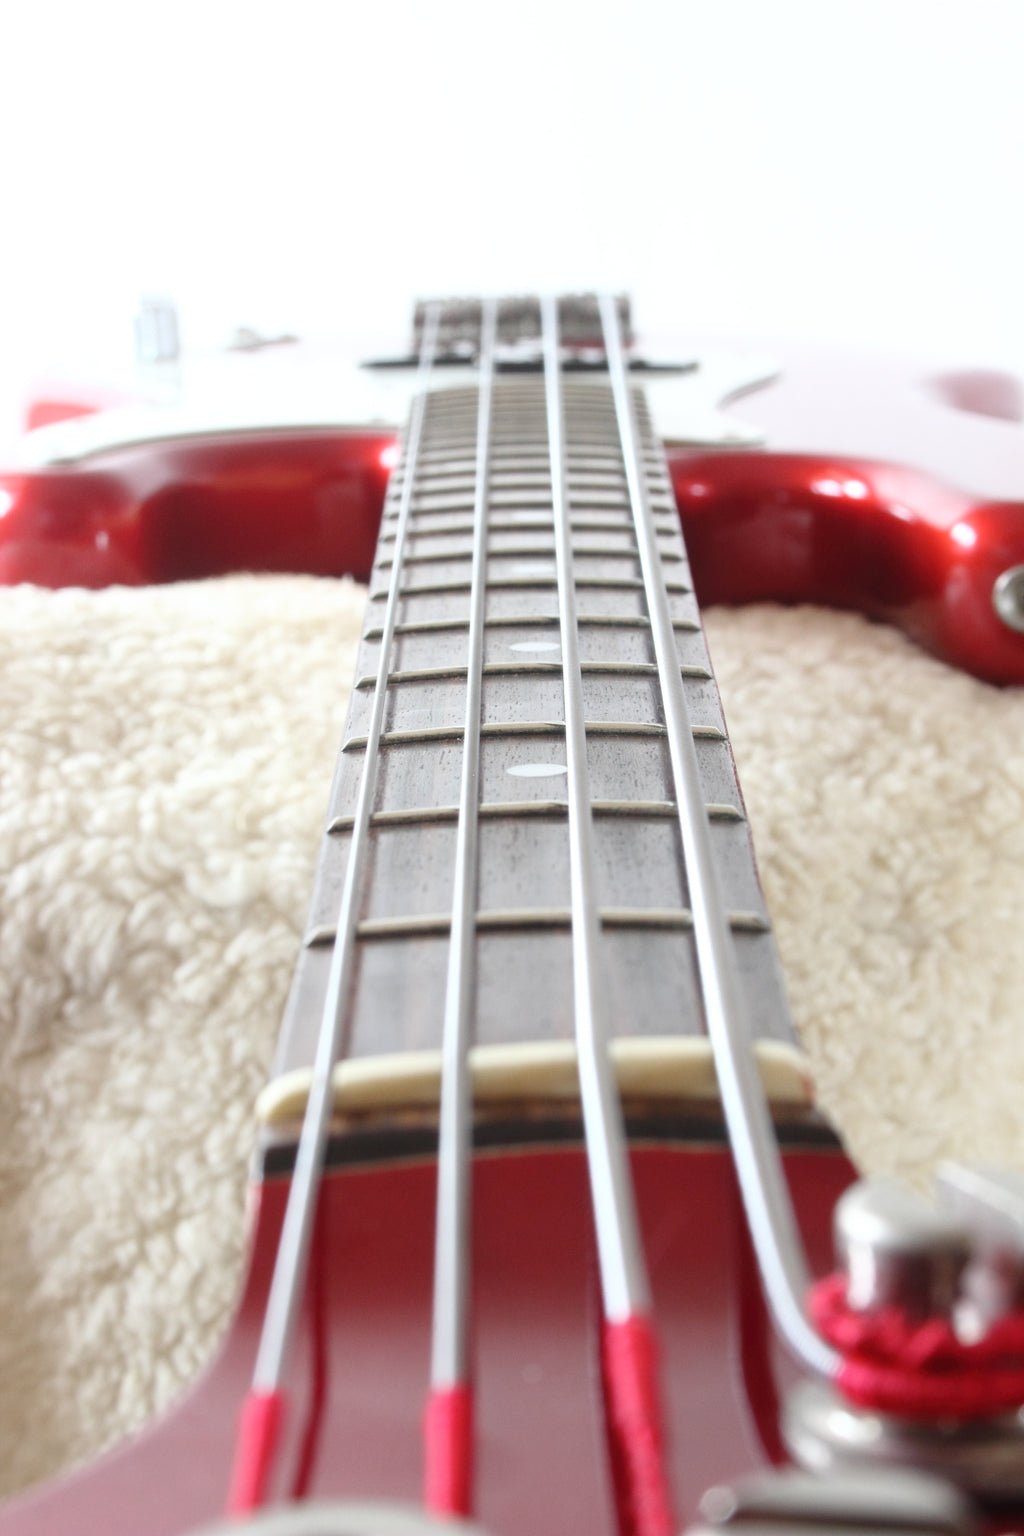 Tokai Hard Puncher PB60 Bass Metallic Red 1981